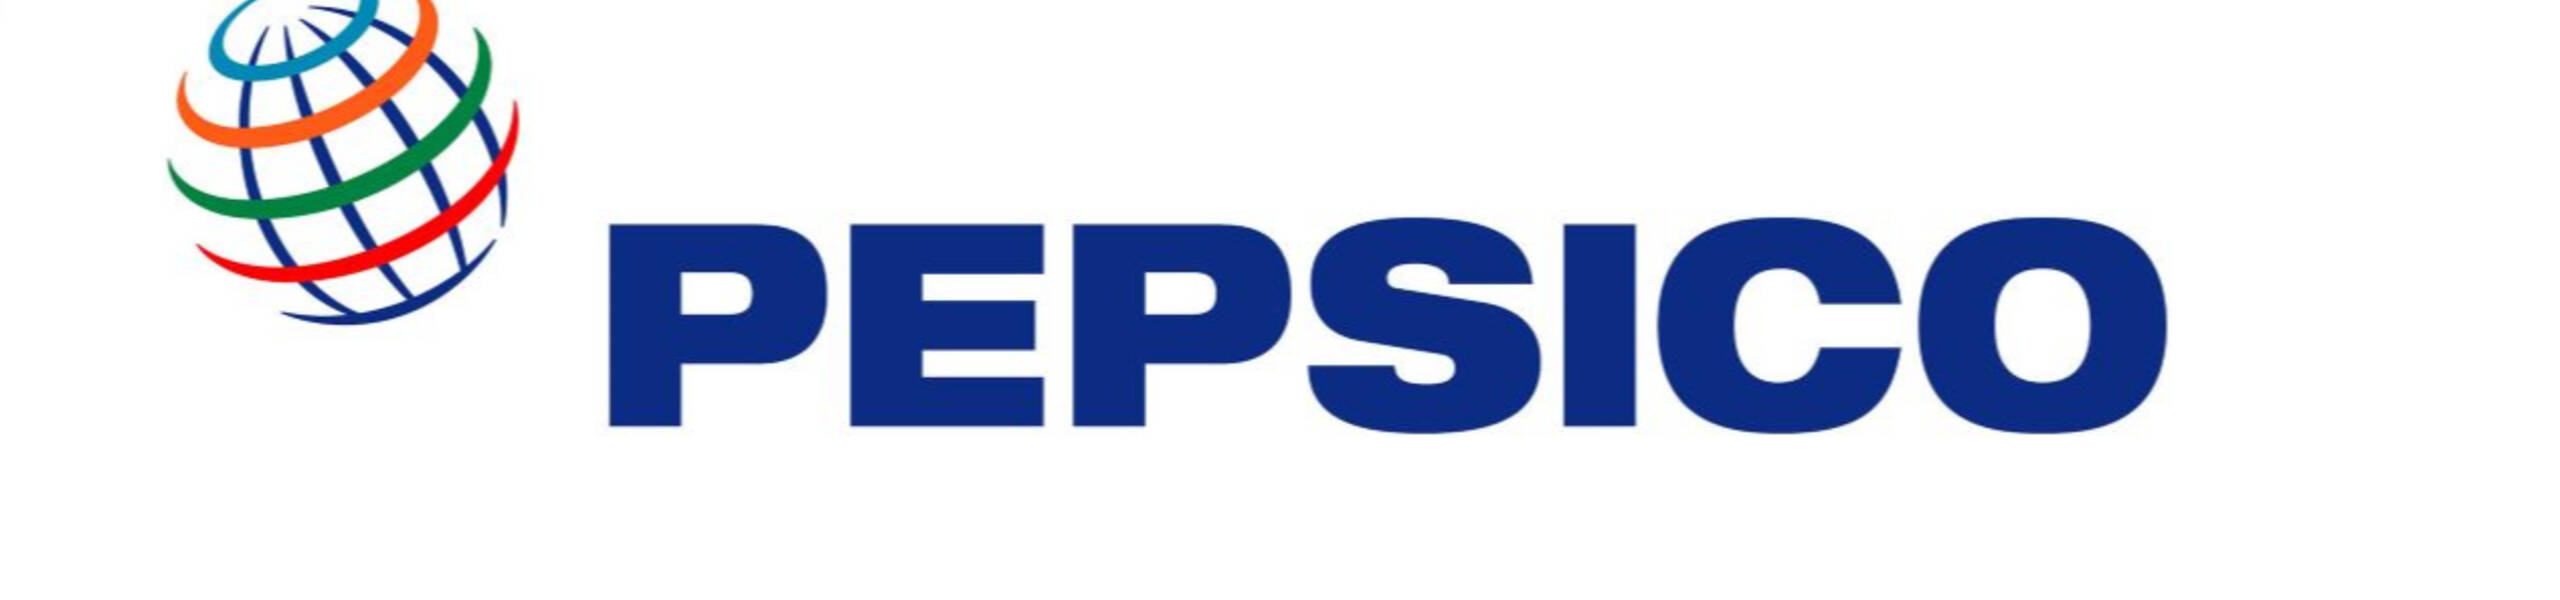 PEPSICO stock: going steady